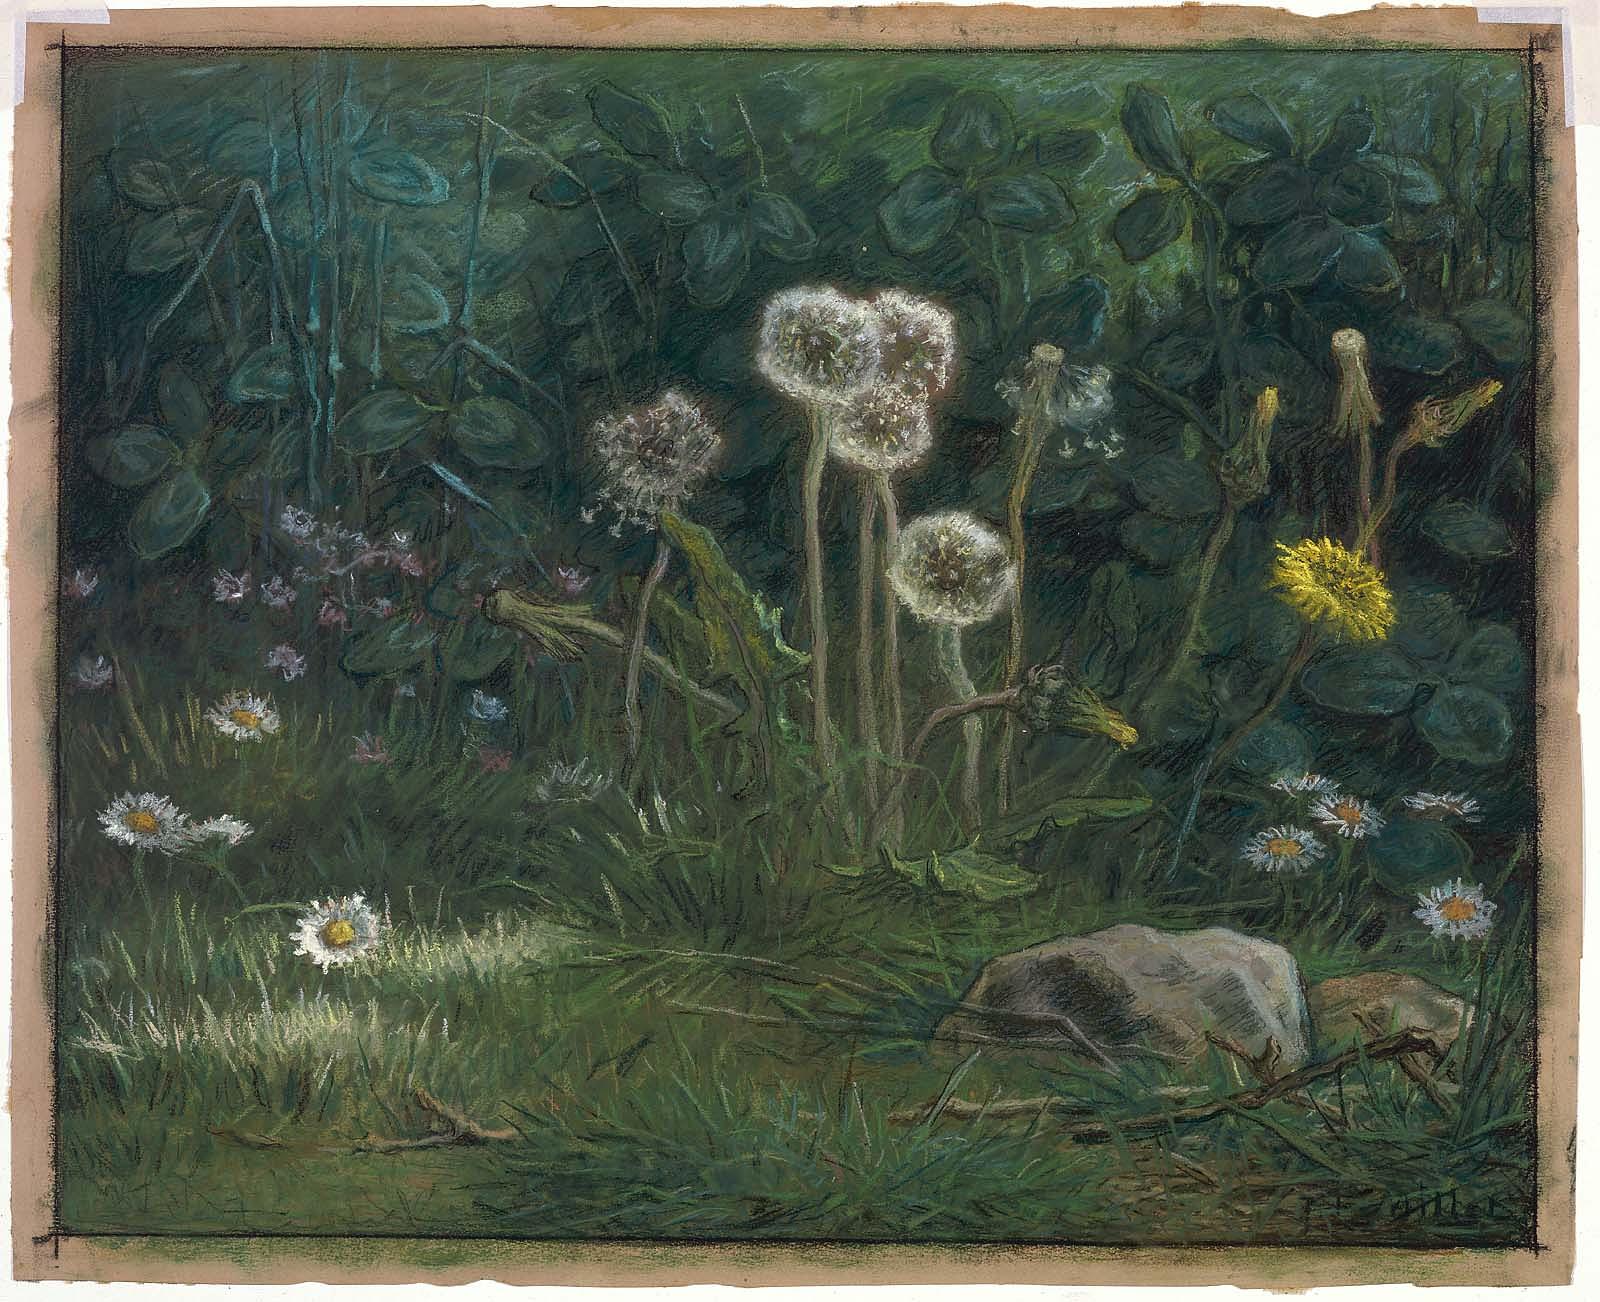 Jean-François Millet, "Dandelions," 1867-8, pastel on tan wove paper, 16 x 19 3/4 in (40.6 x 50.2 cm), Museum of Fine Arts, Boston, Massachusetts, USA